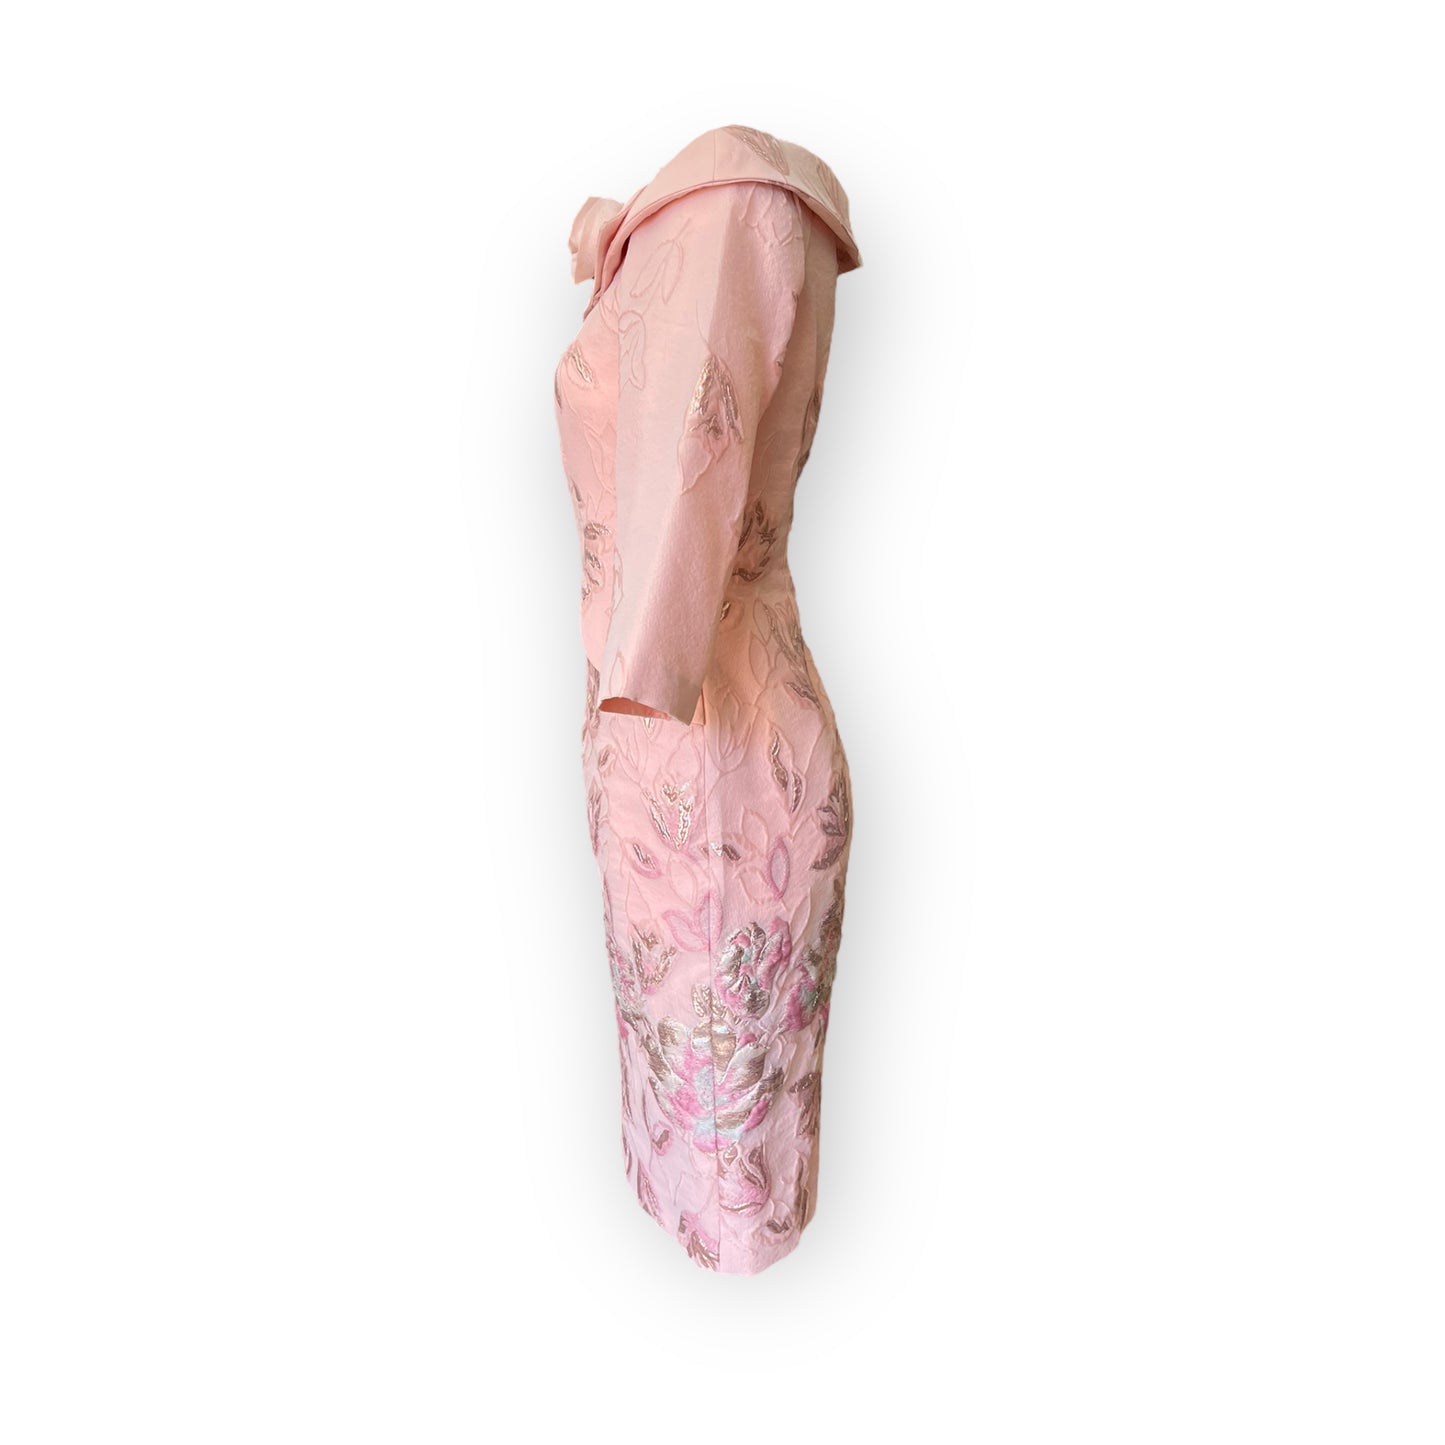 NEW Evasse Pale Pink Dress